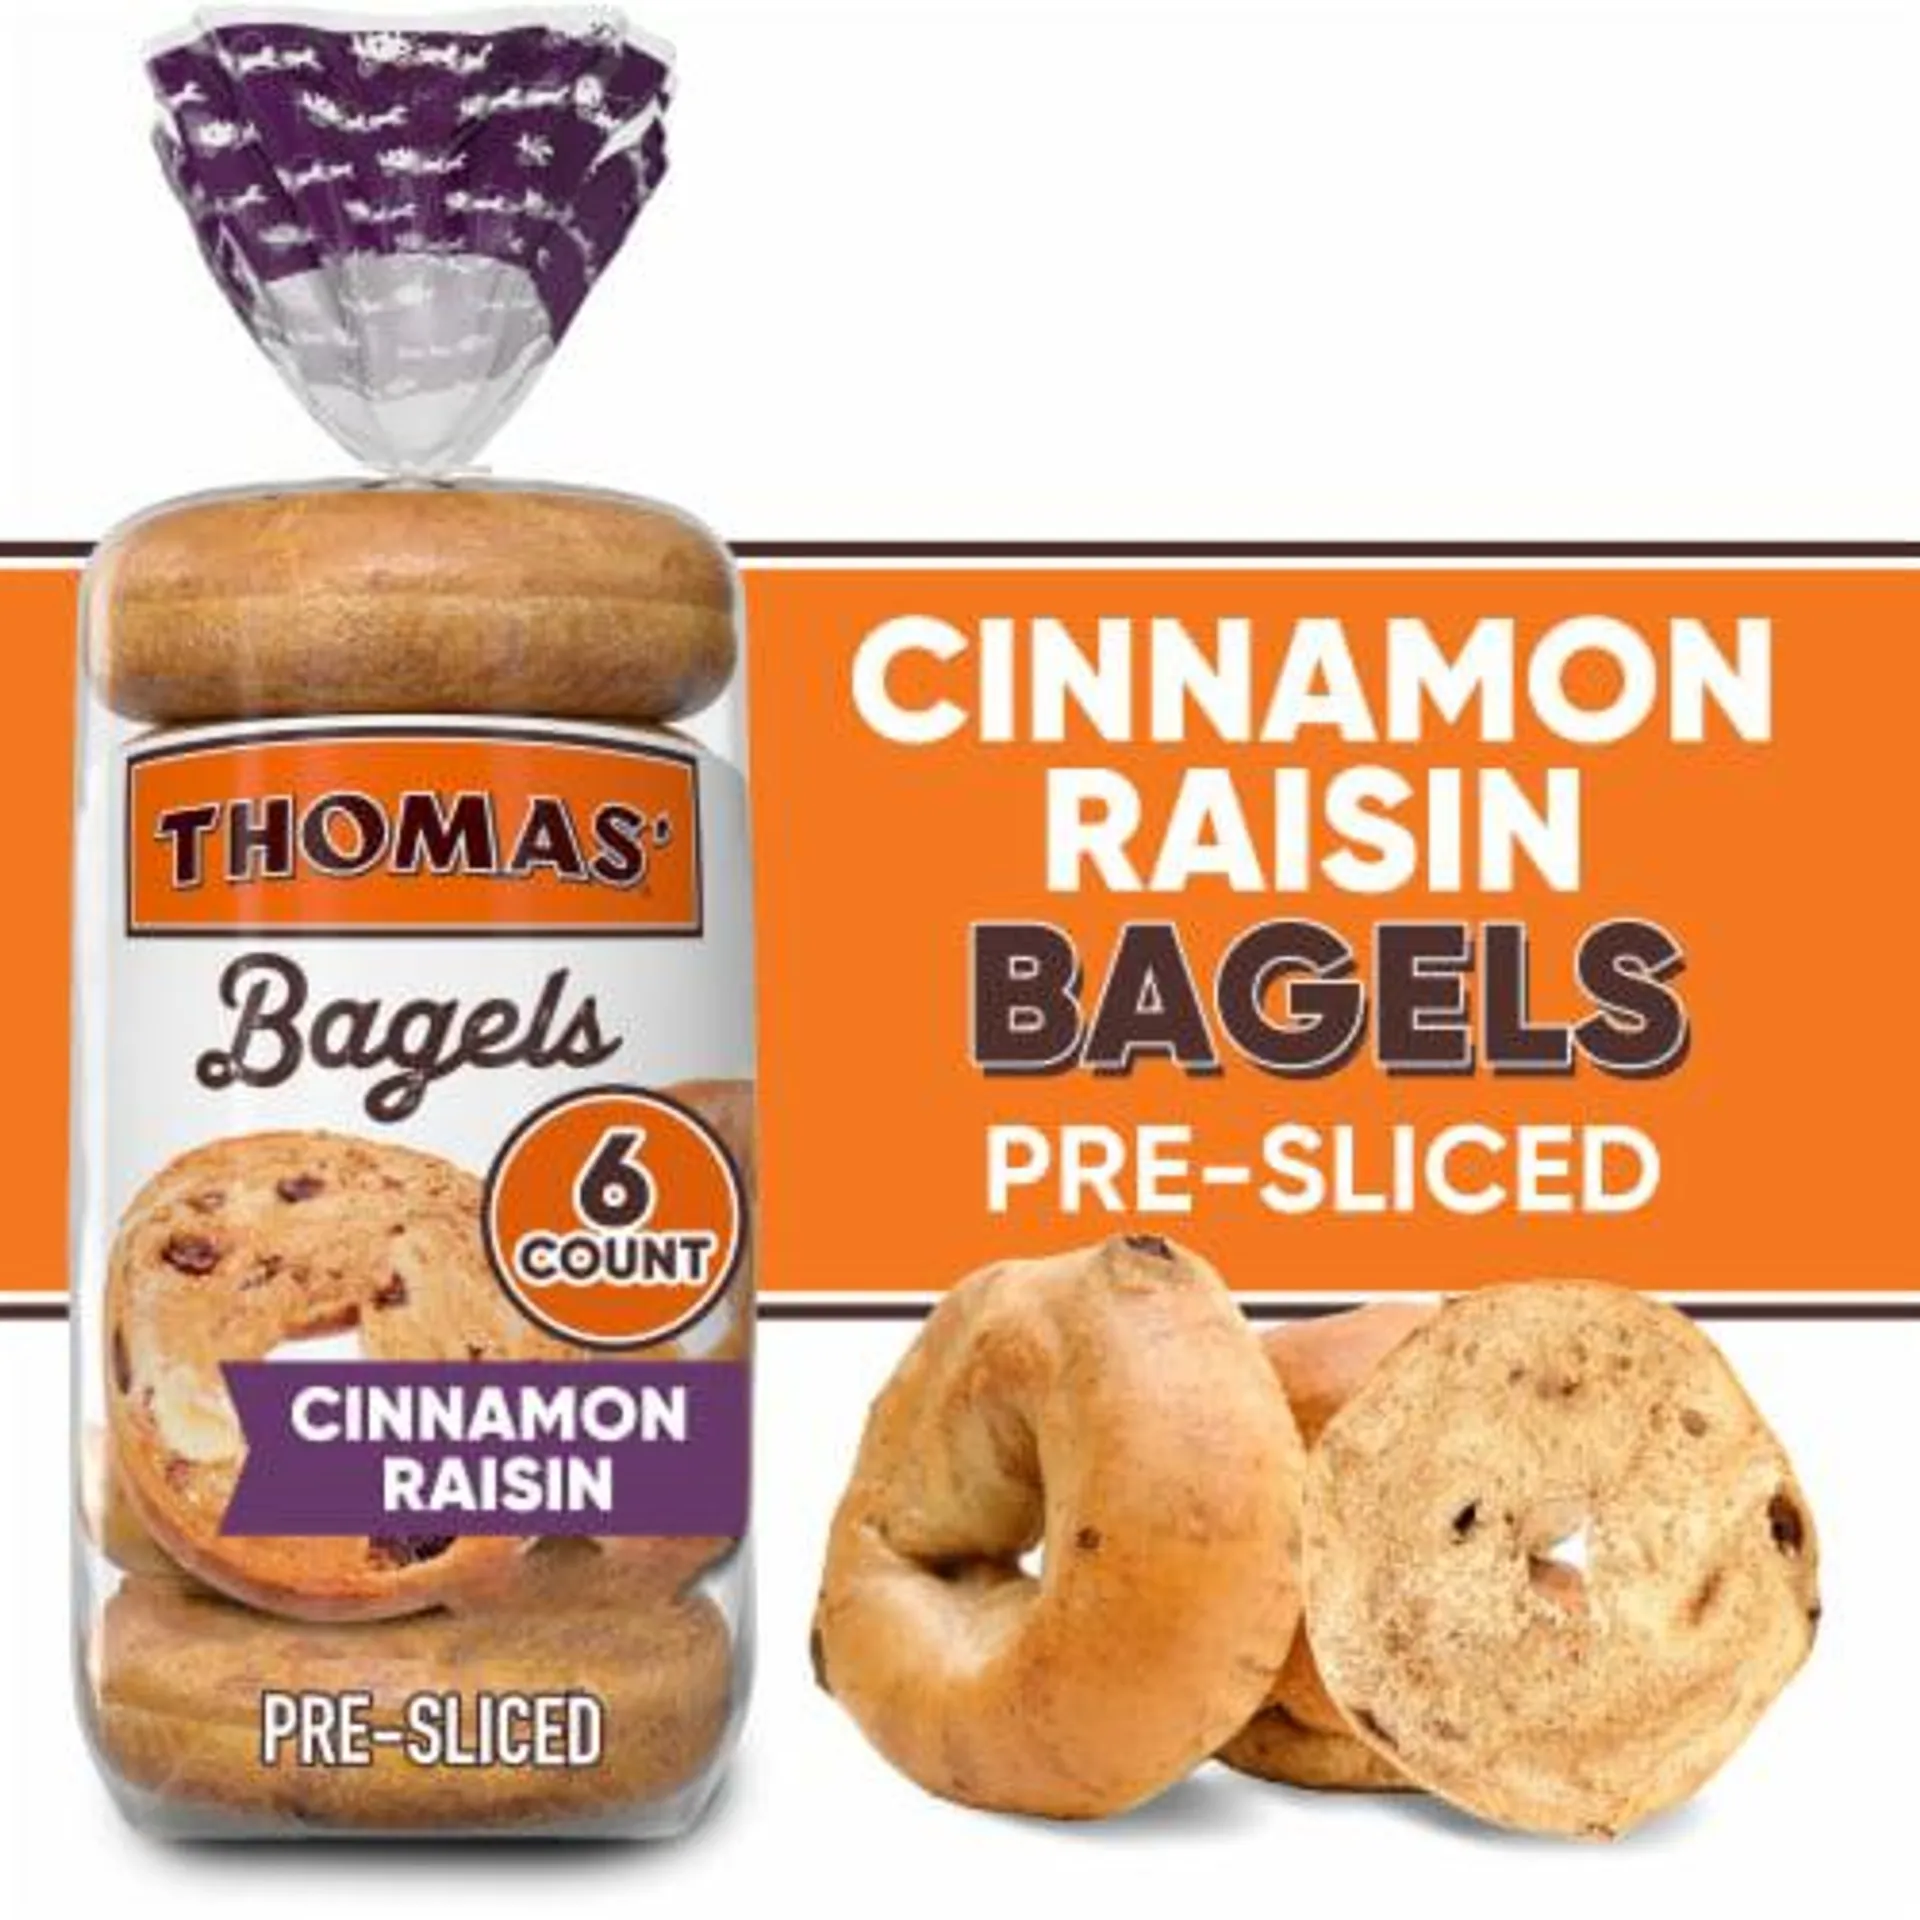 Thomas' Cinnamon Raisin Bagels